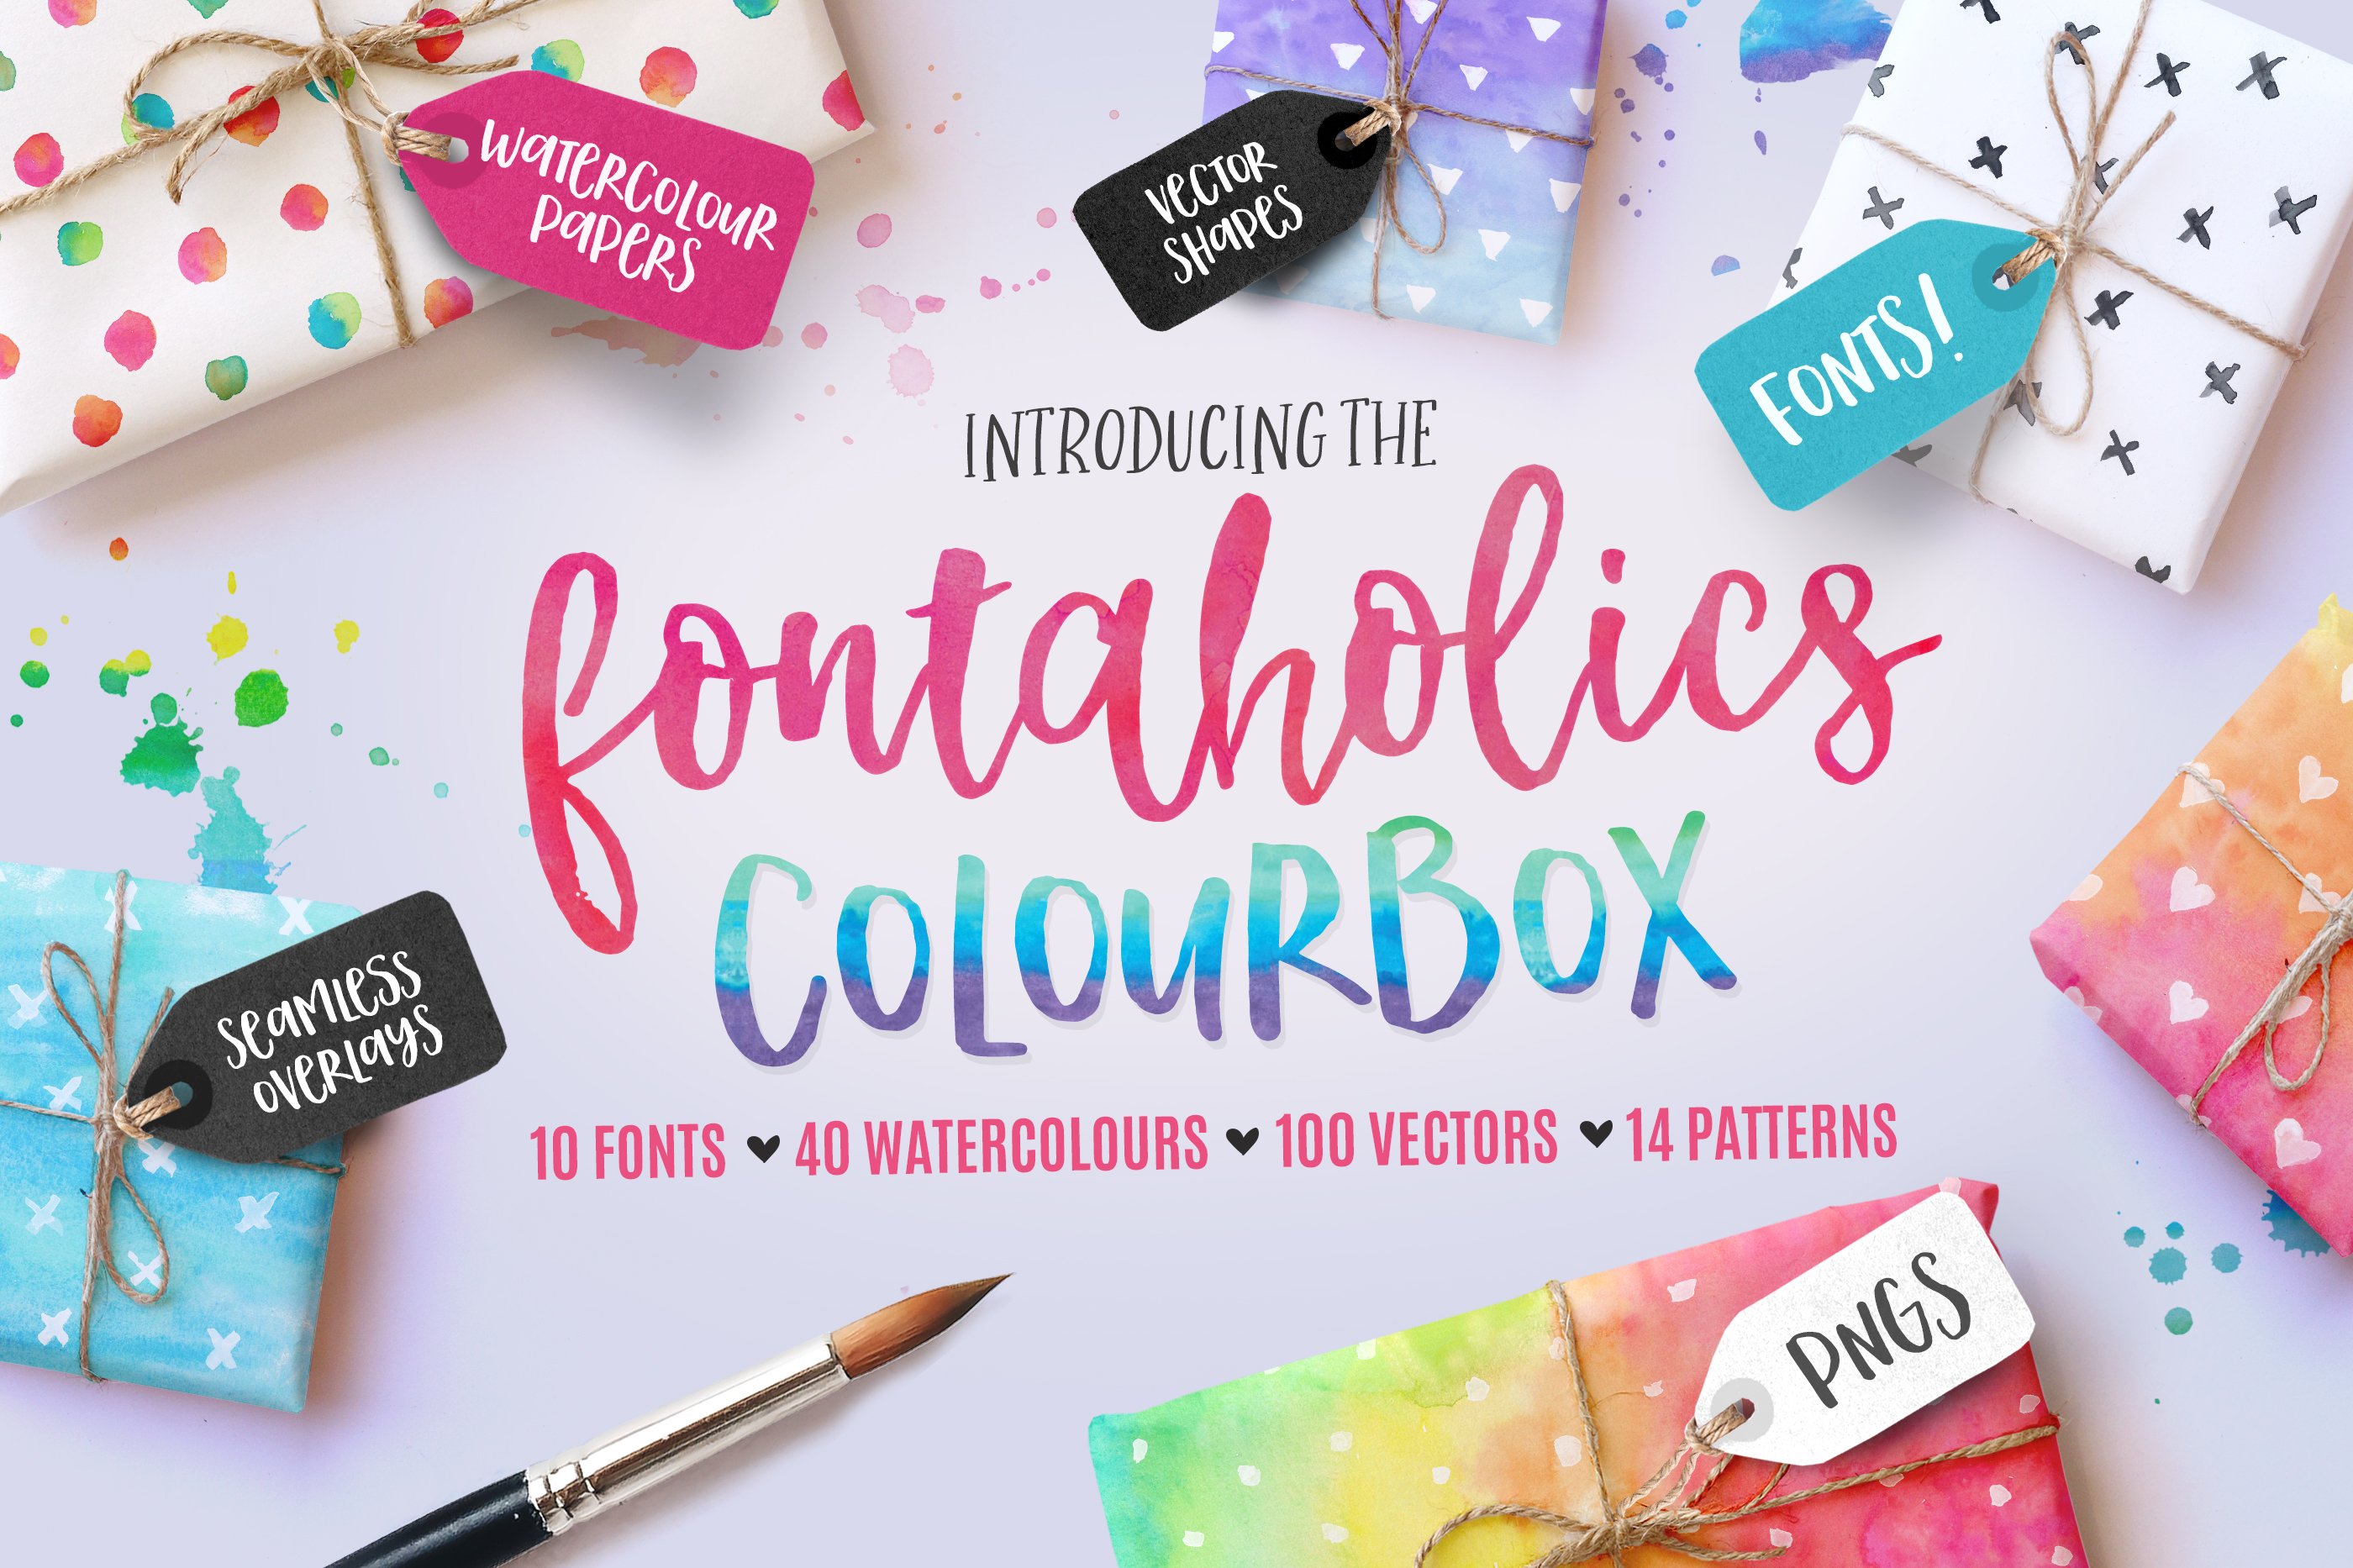 The Fontaholics Colourbox cover image.